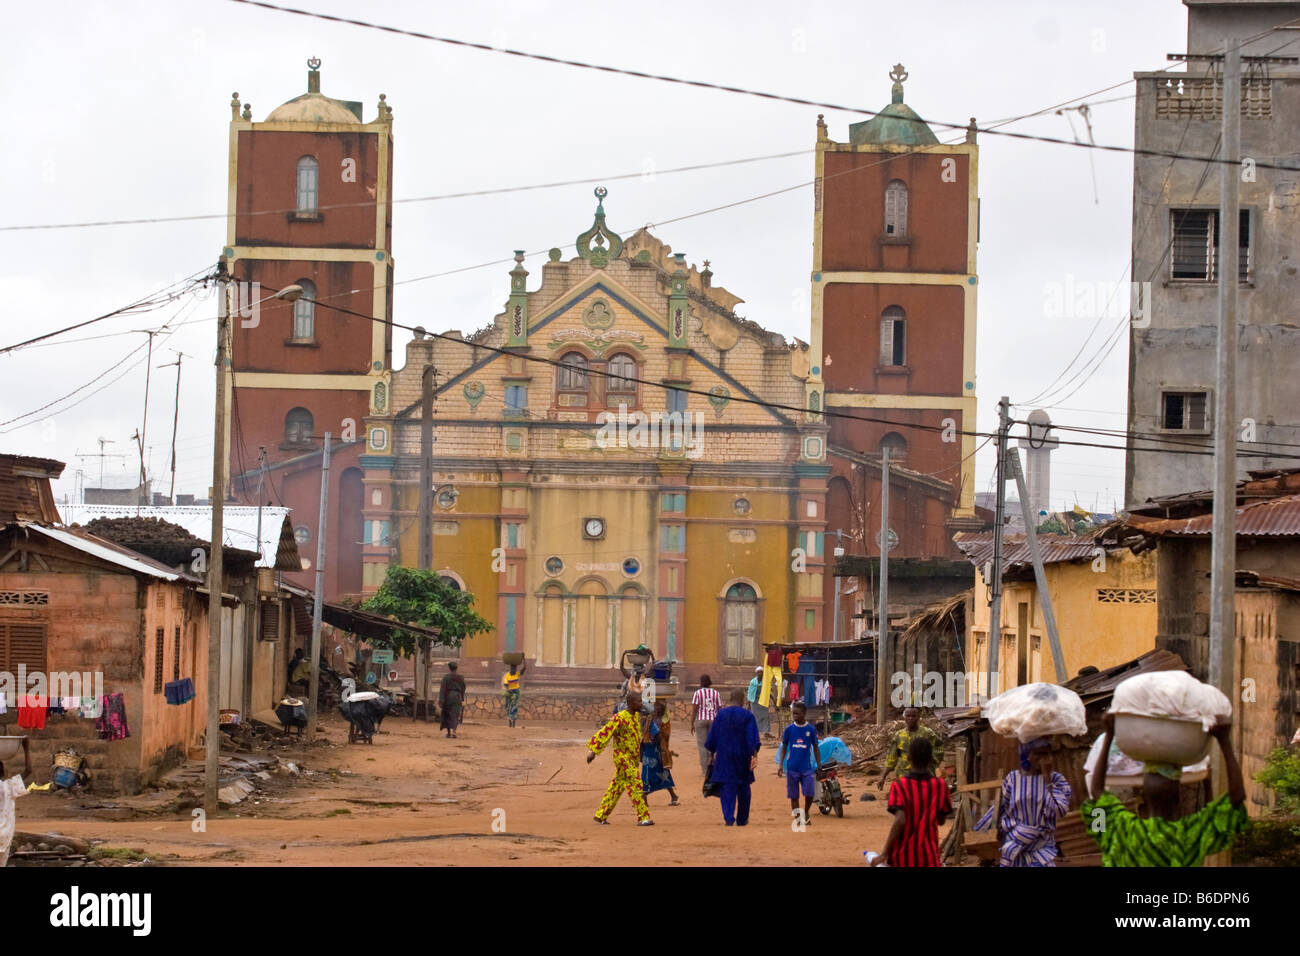 Mosque in Porto Novo, Benin capital Stock Photo - Alamy